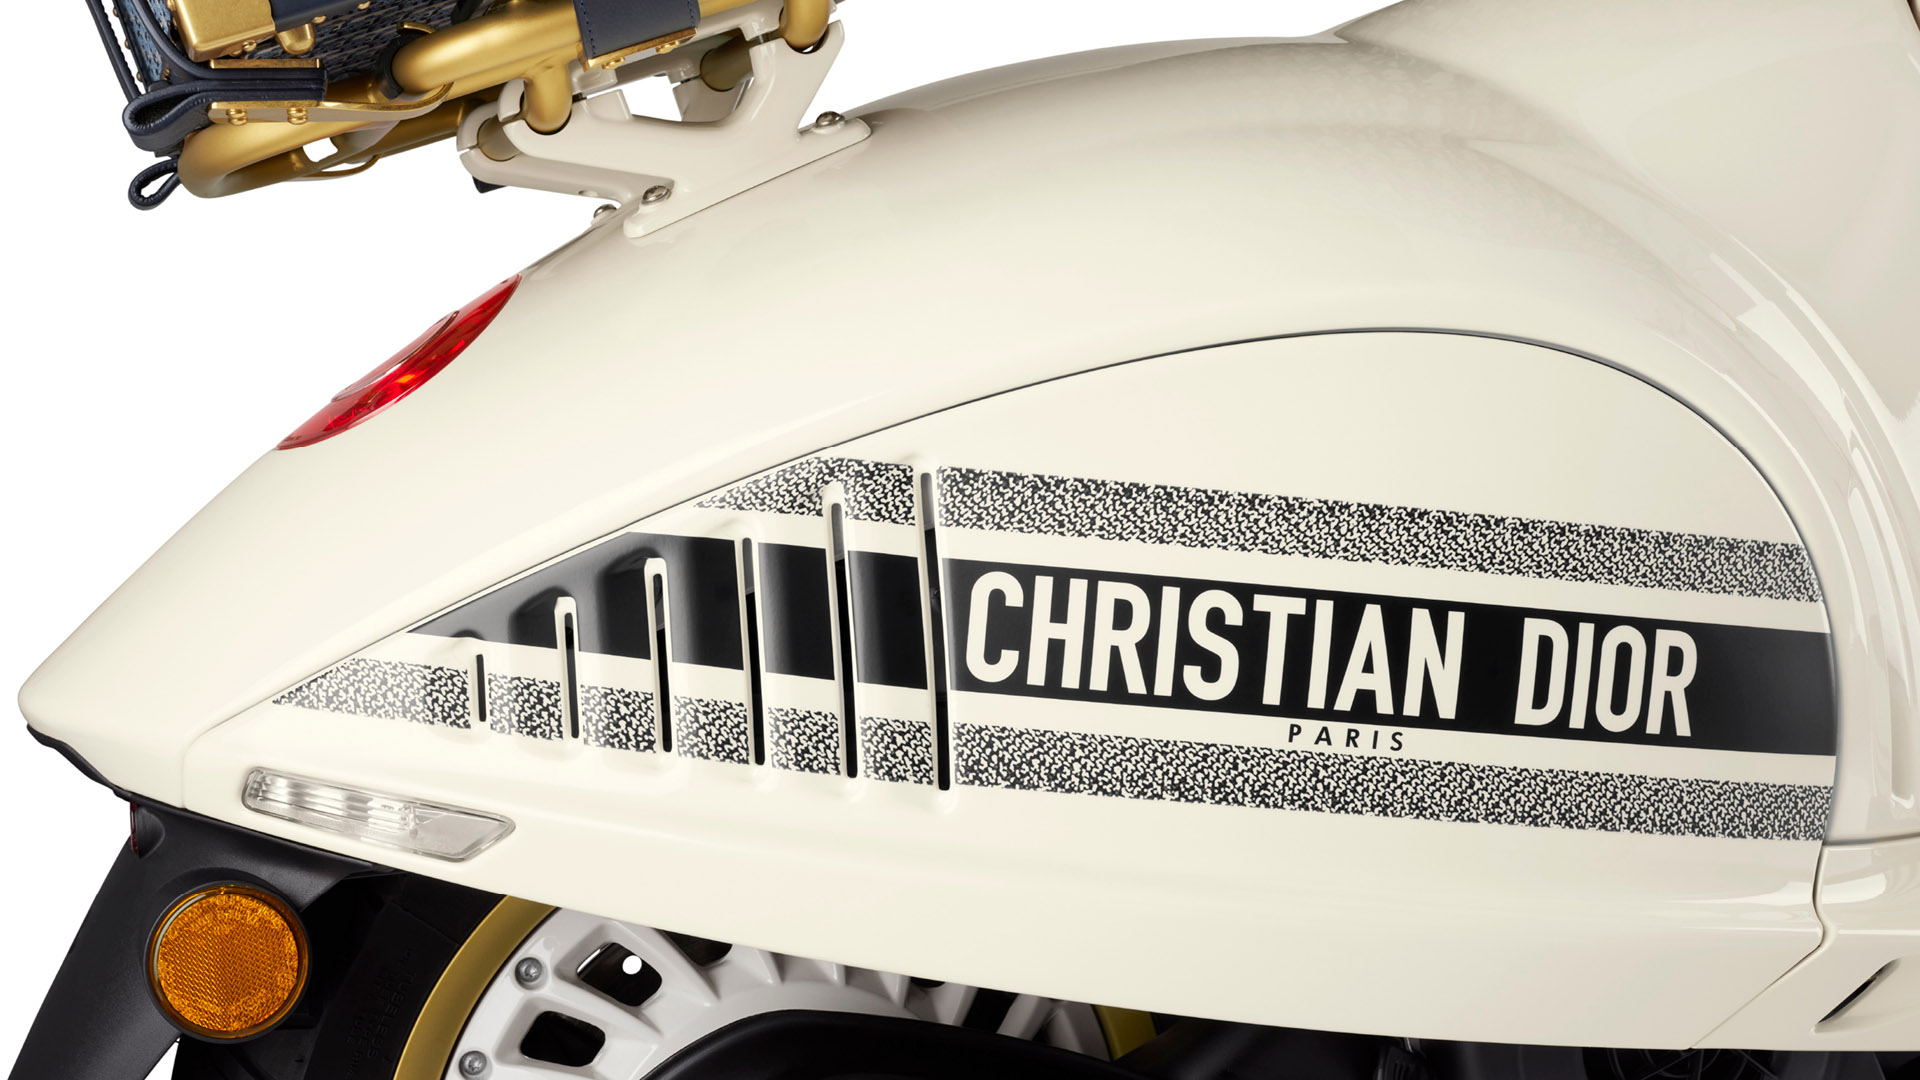 Vespa 946 Christian Dior Edition Unveiled